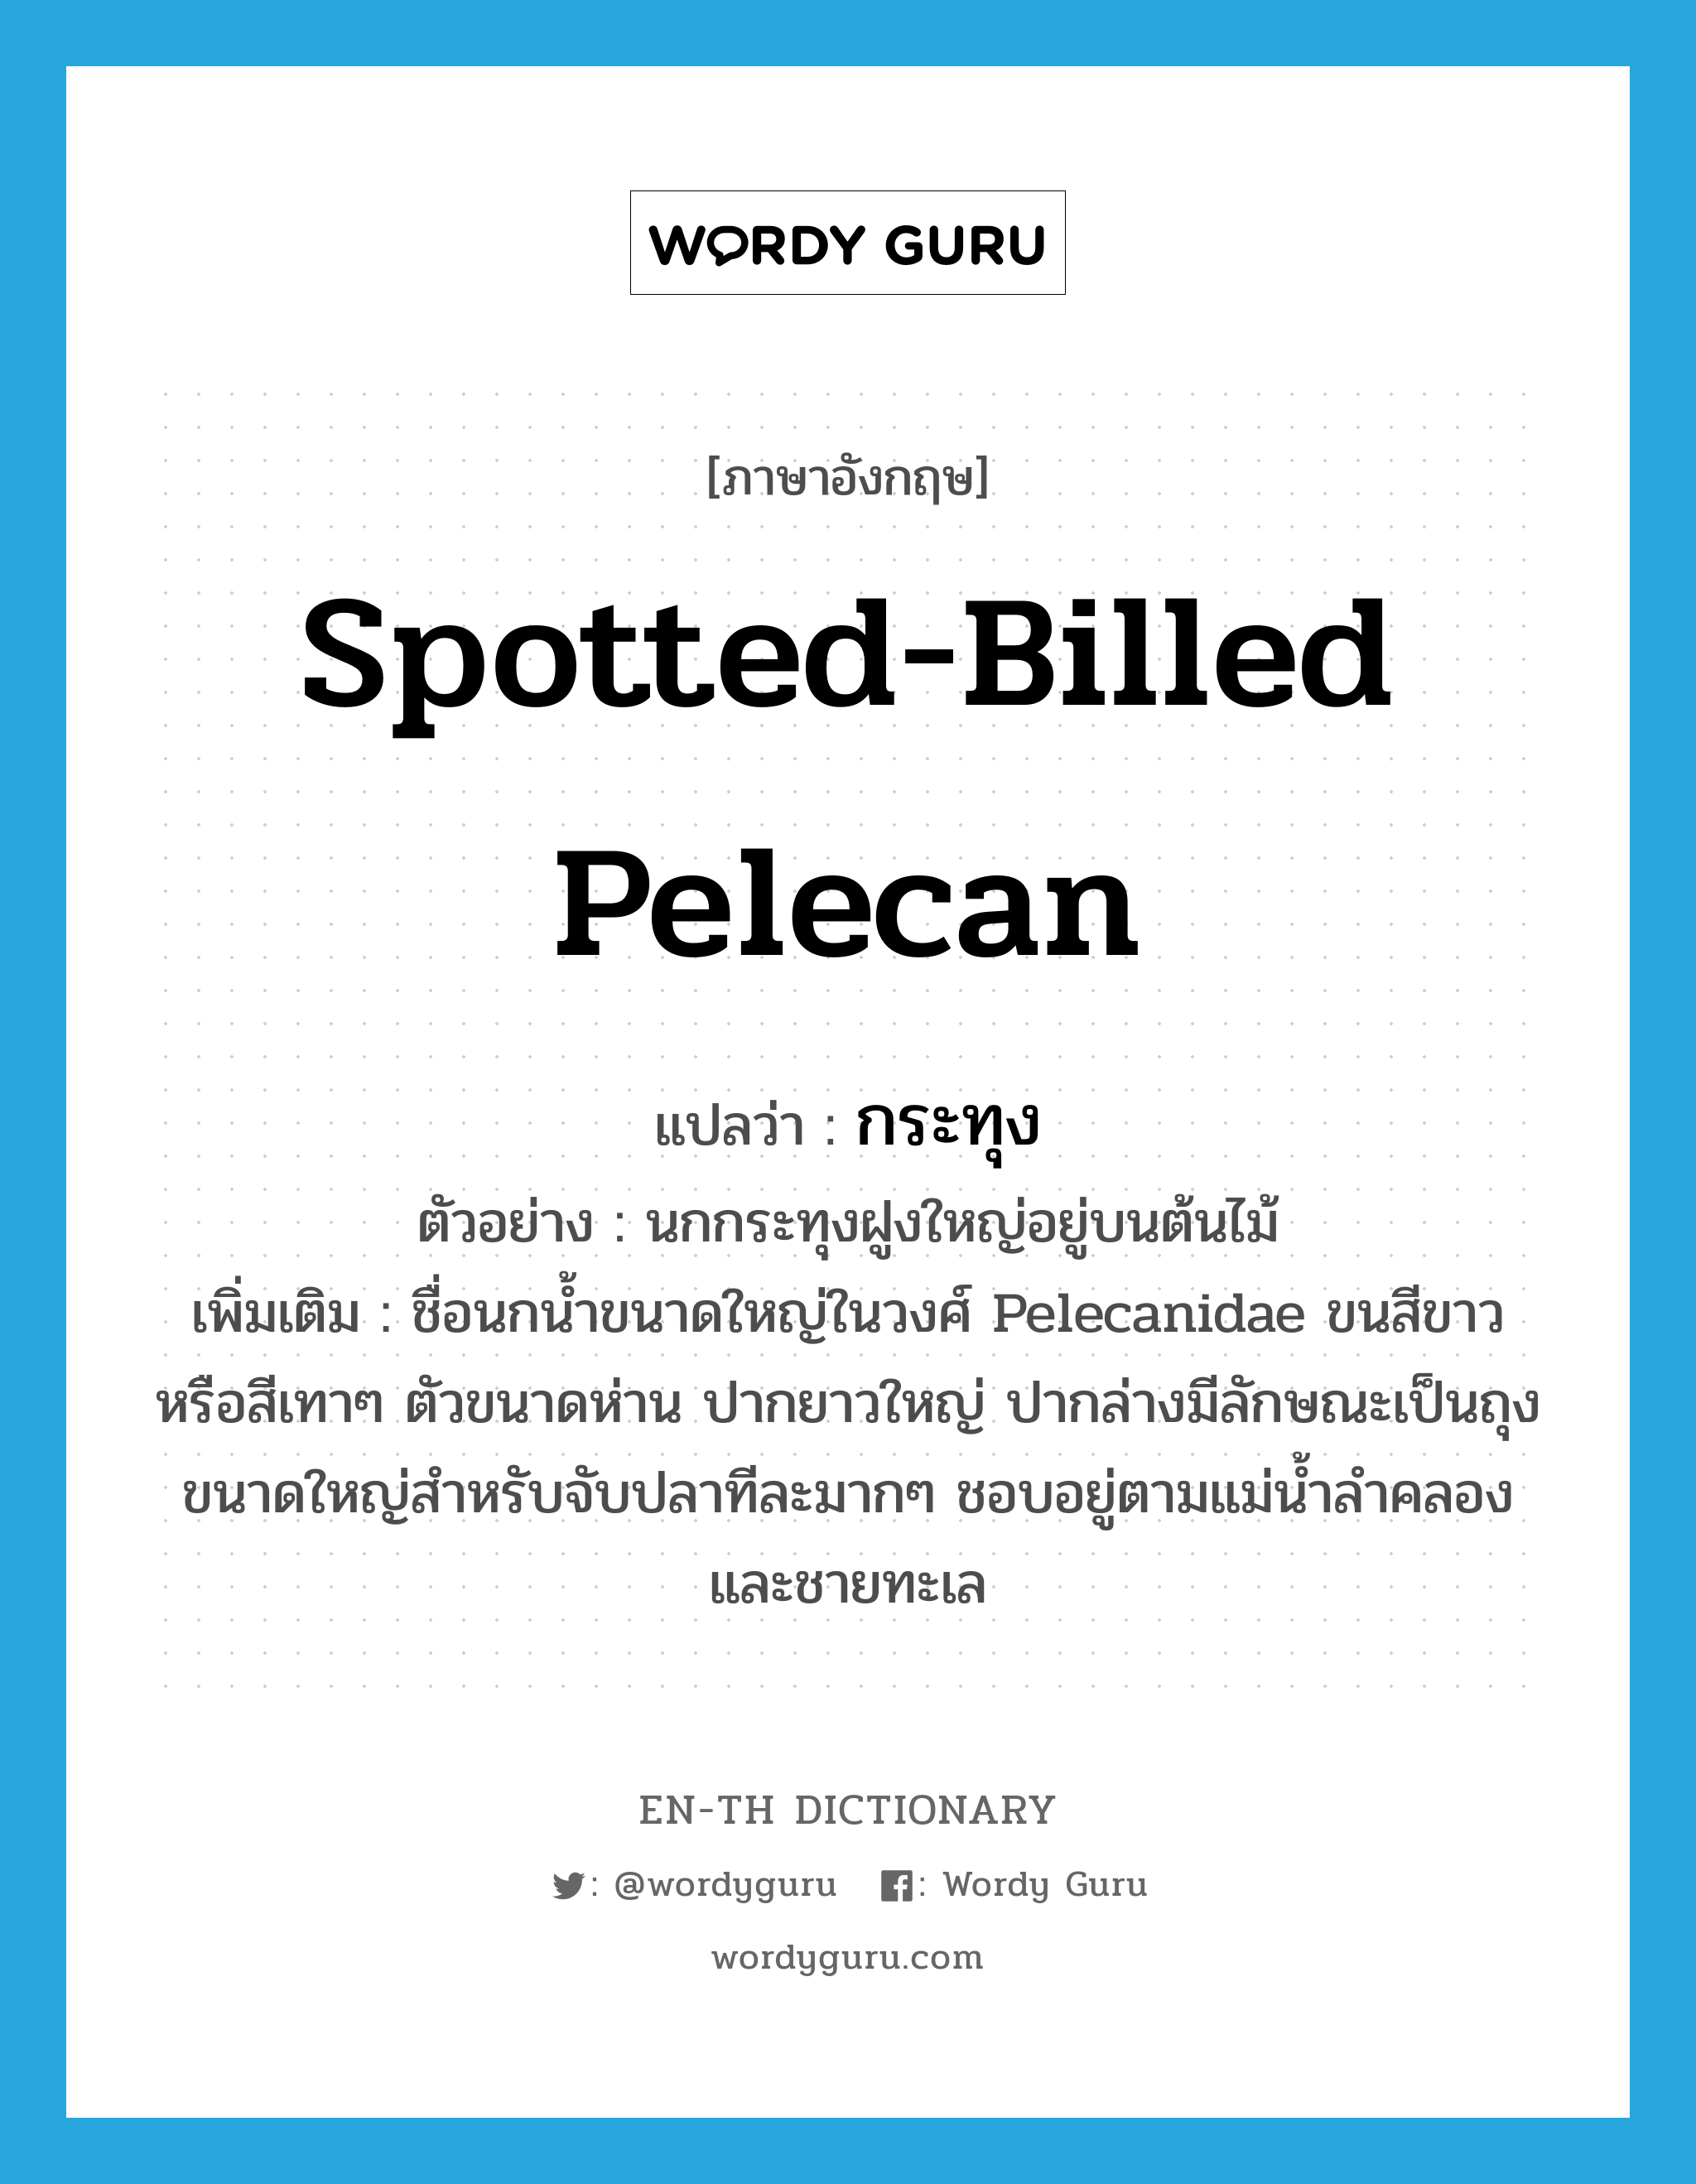 Spotted-billed Pelecan แปลว่า?, คำศัพท์ภาษาอังกฤษ Spotted-billed Pelecan แปลว่า กระทุง ประเภท N ตัวอย่าง นกกระทุงฝูงใหญ่อยู่บนต้นไม้ เพิ่มเติม ชื่อนกน้ำขนาดใหญ่ในวงศ์ Pelecanidae ขนสีขาวหรือสีเทาๆ ตัวขนาดห่าน ปากยาวใหญ่ ปากล่างมีลักษณะเป็นถุงขนาดใหญ่สำหรับจับปลาทีละมากๆ ชอบอยู่ตามแม่น้ำลำคลองและชายทะเล หมวด N